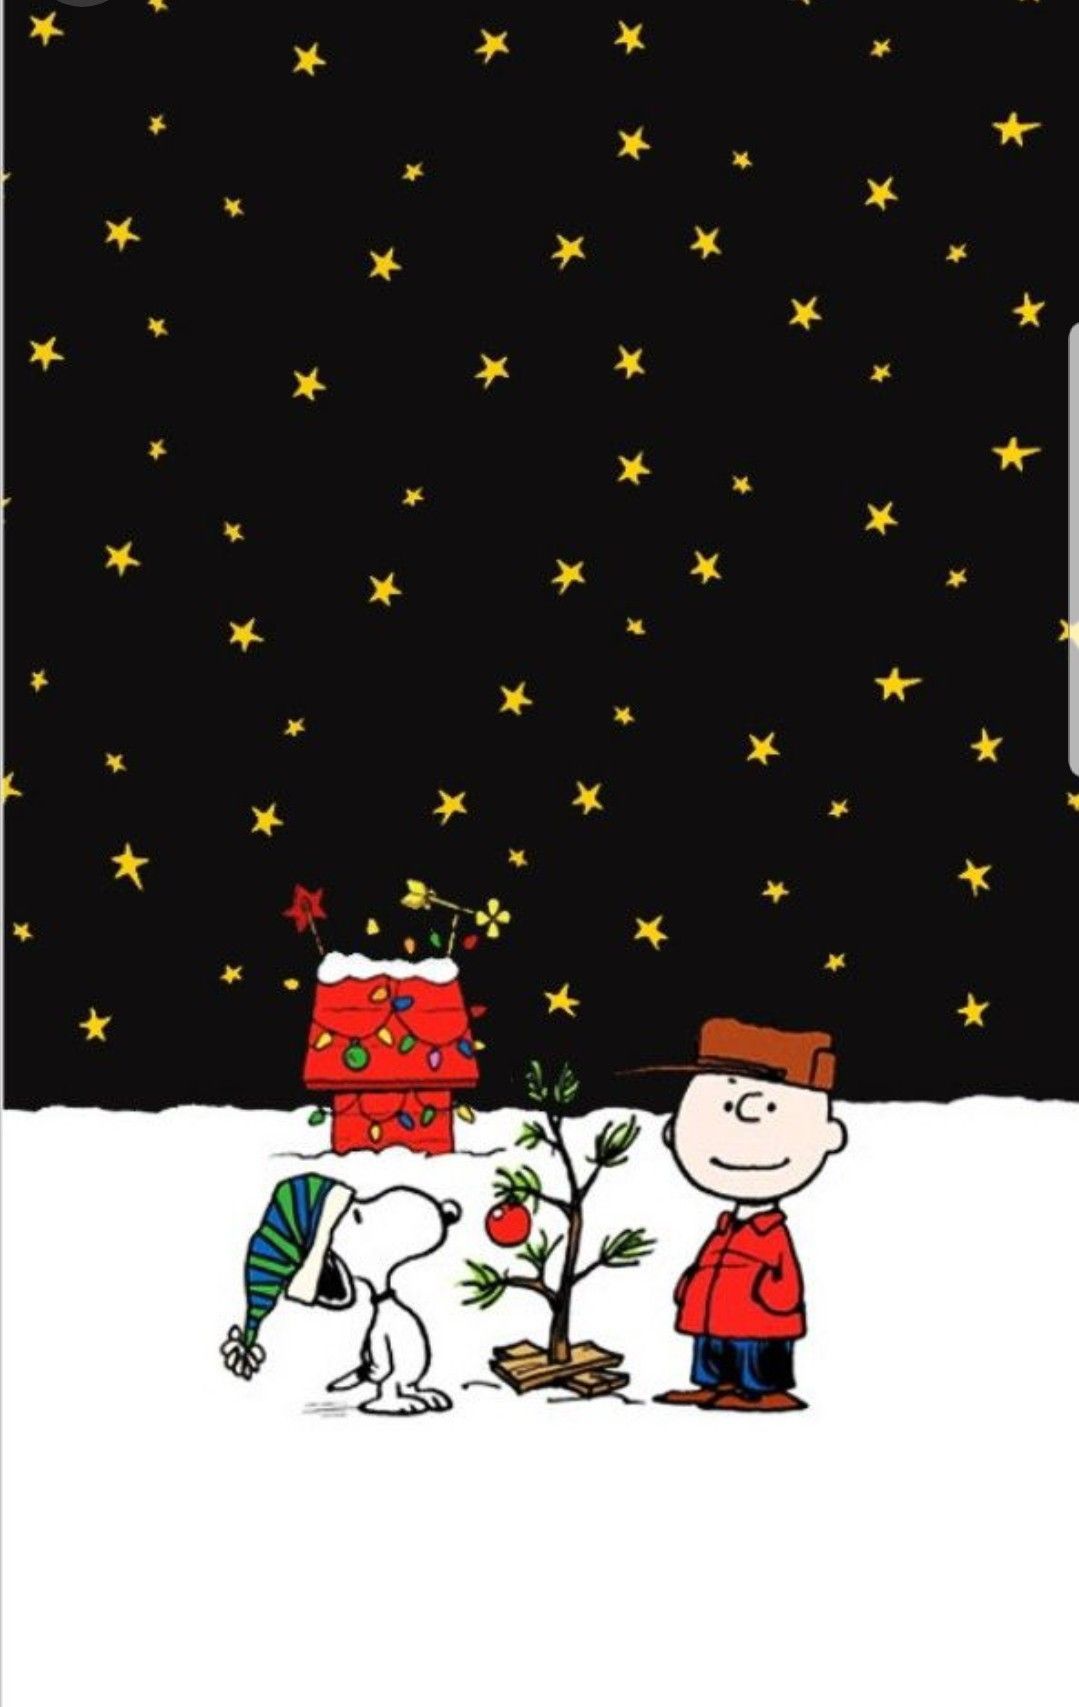 Charlie Brown Christmas. Snoopy wallpaper, Wallpaper iphone christmas, Christmas phone wallpaper